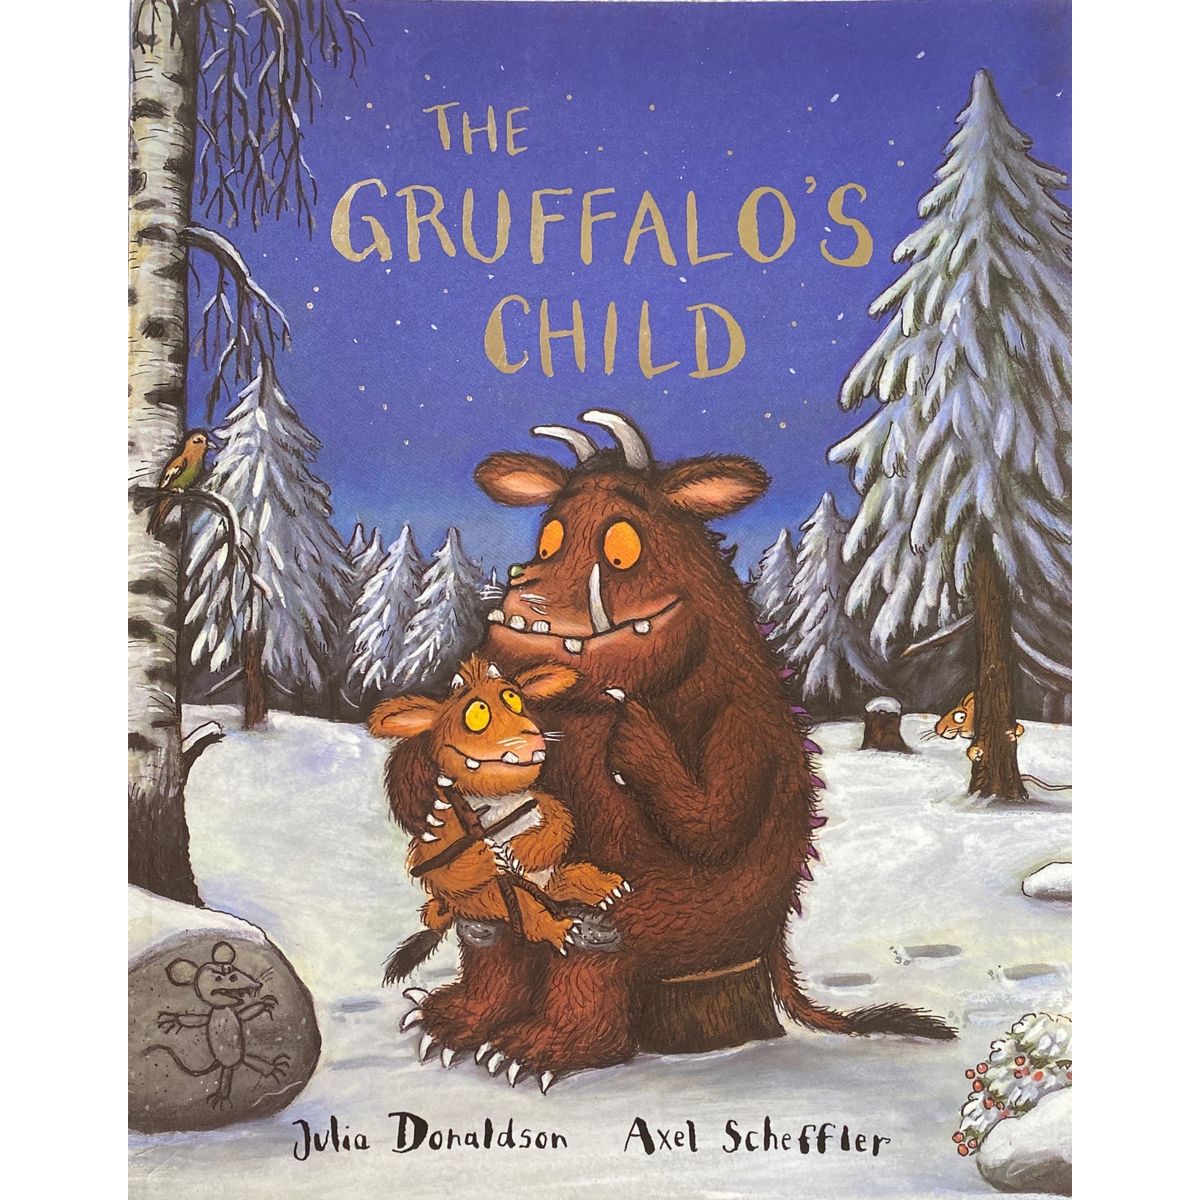 ISBN: 9781405020466 / 1405020466 - The Gruffalo's Child by Julia Donaldson and Axel Scheffler [2005]